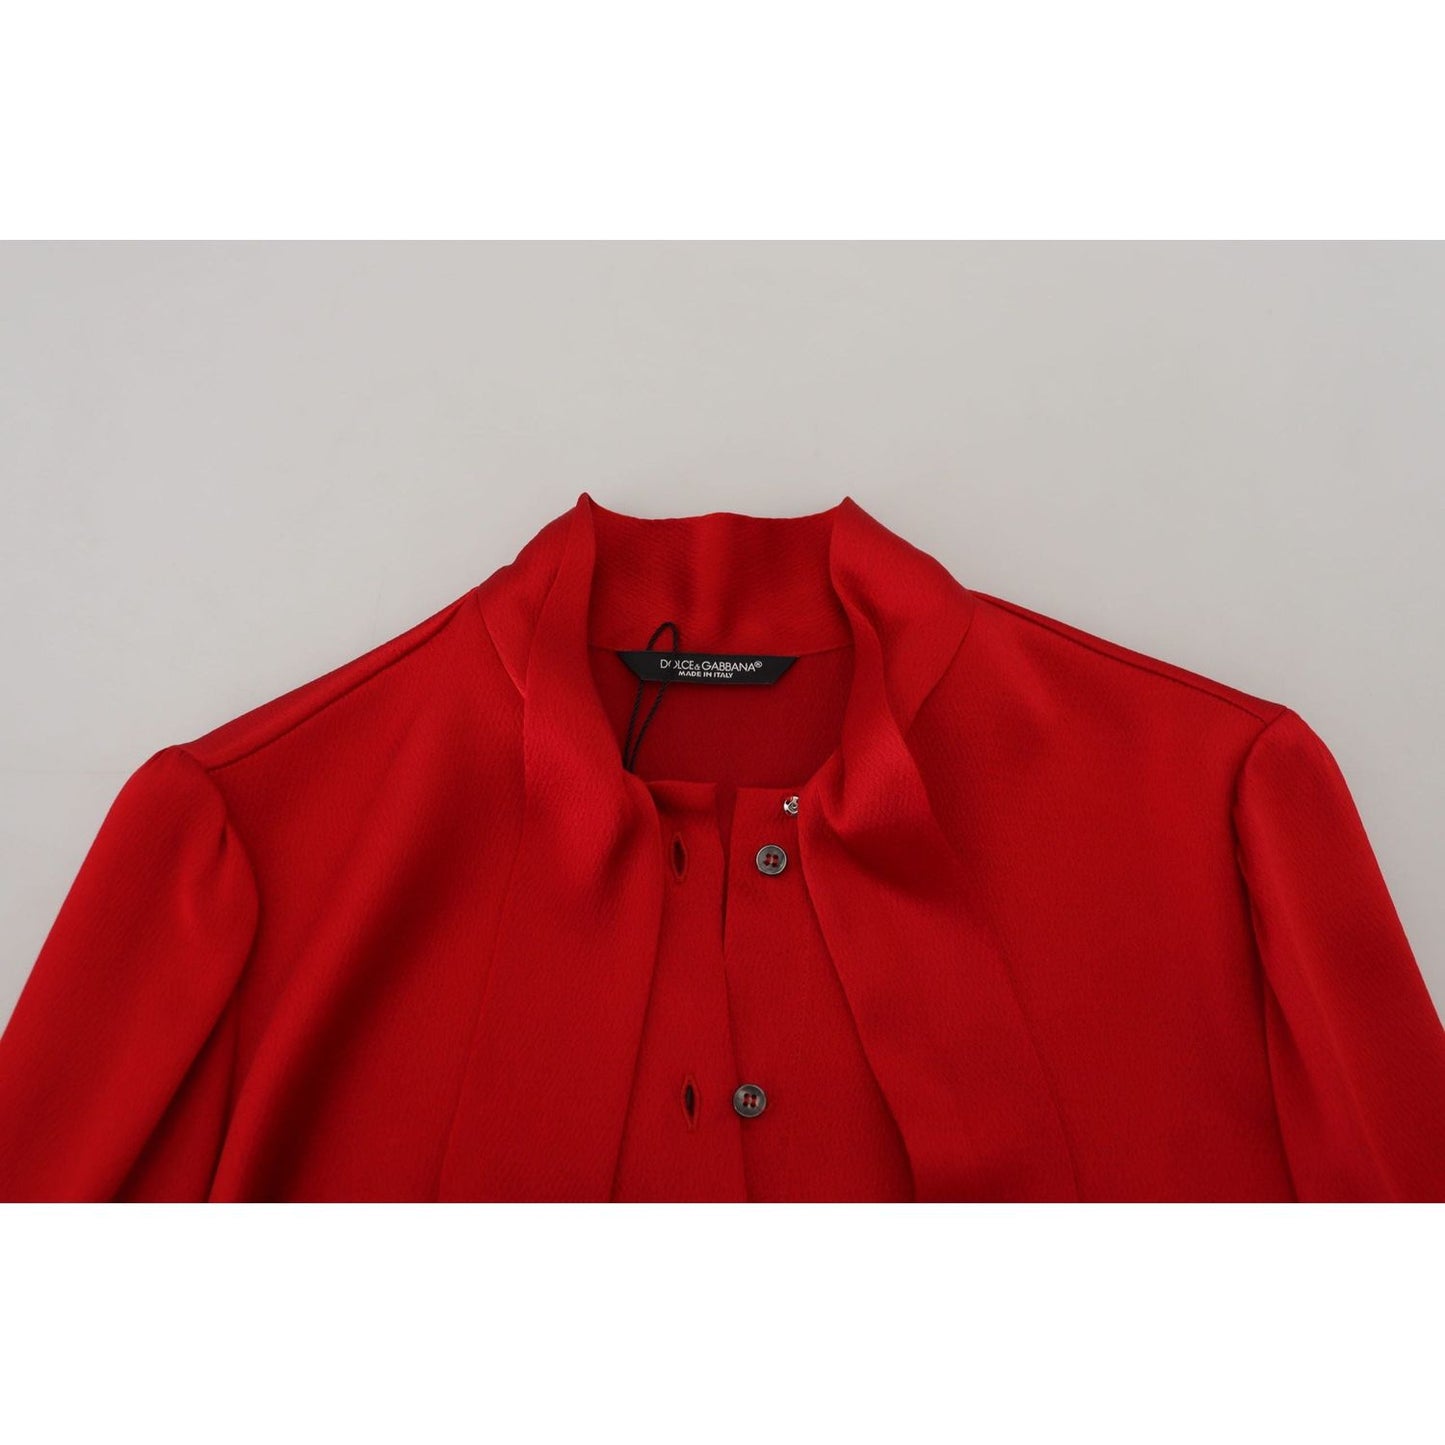 Dolce & Gabbana Elegant Red Ascot Collar Blouse red-ascot-collar-long-sleeves-blouse-top